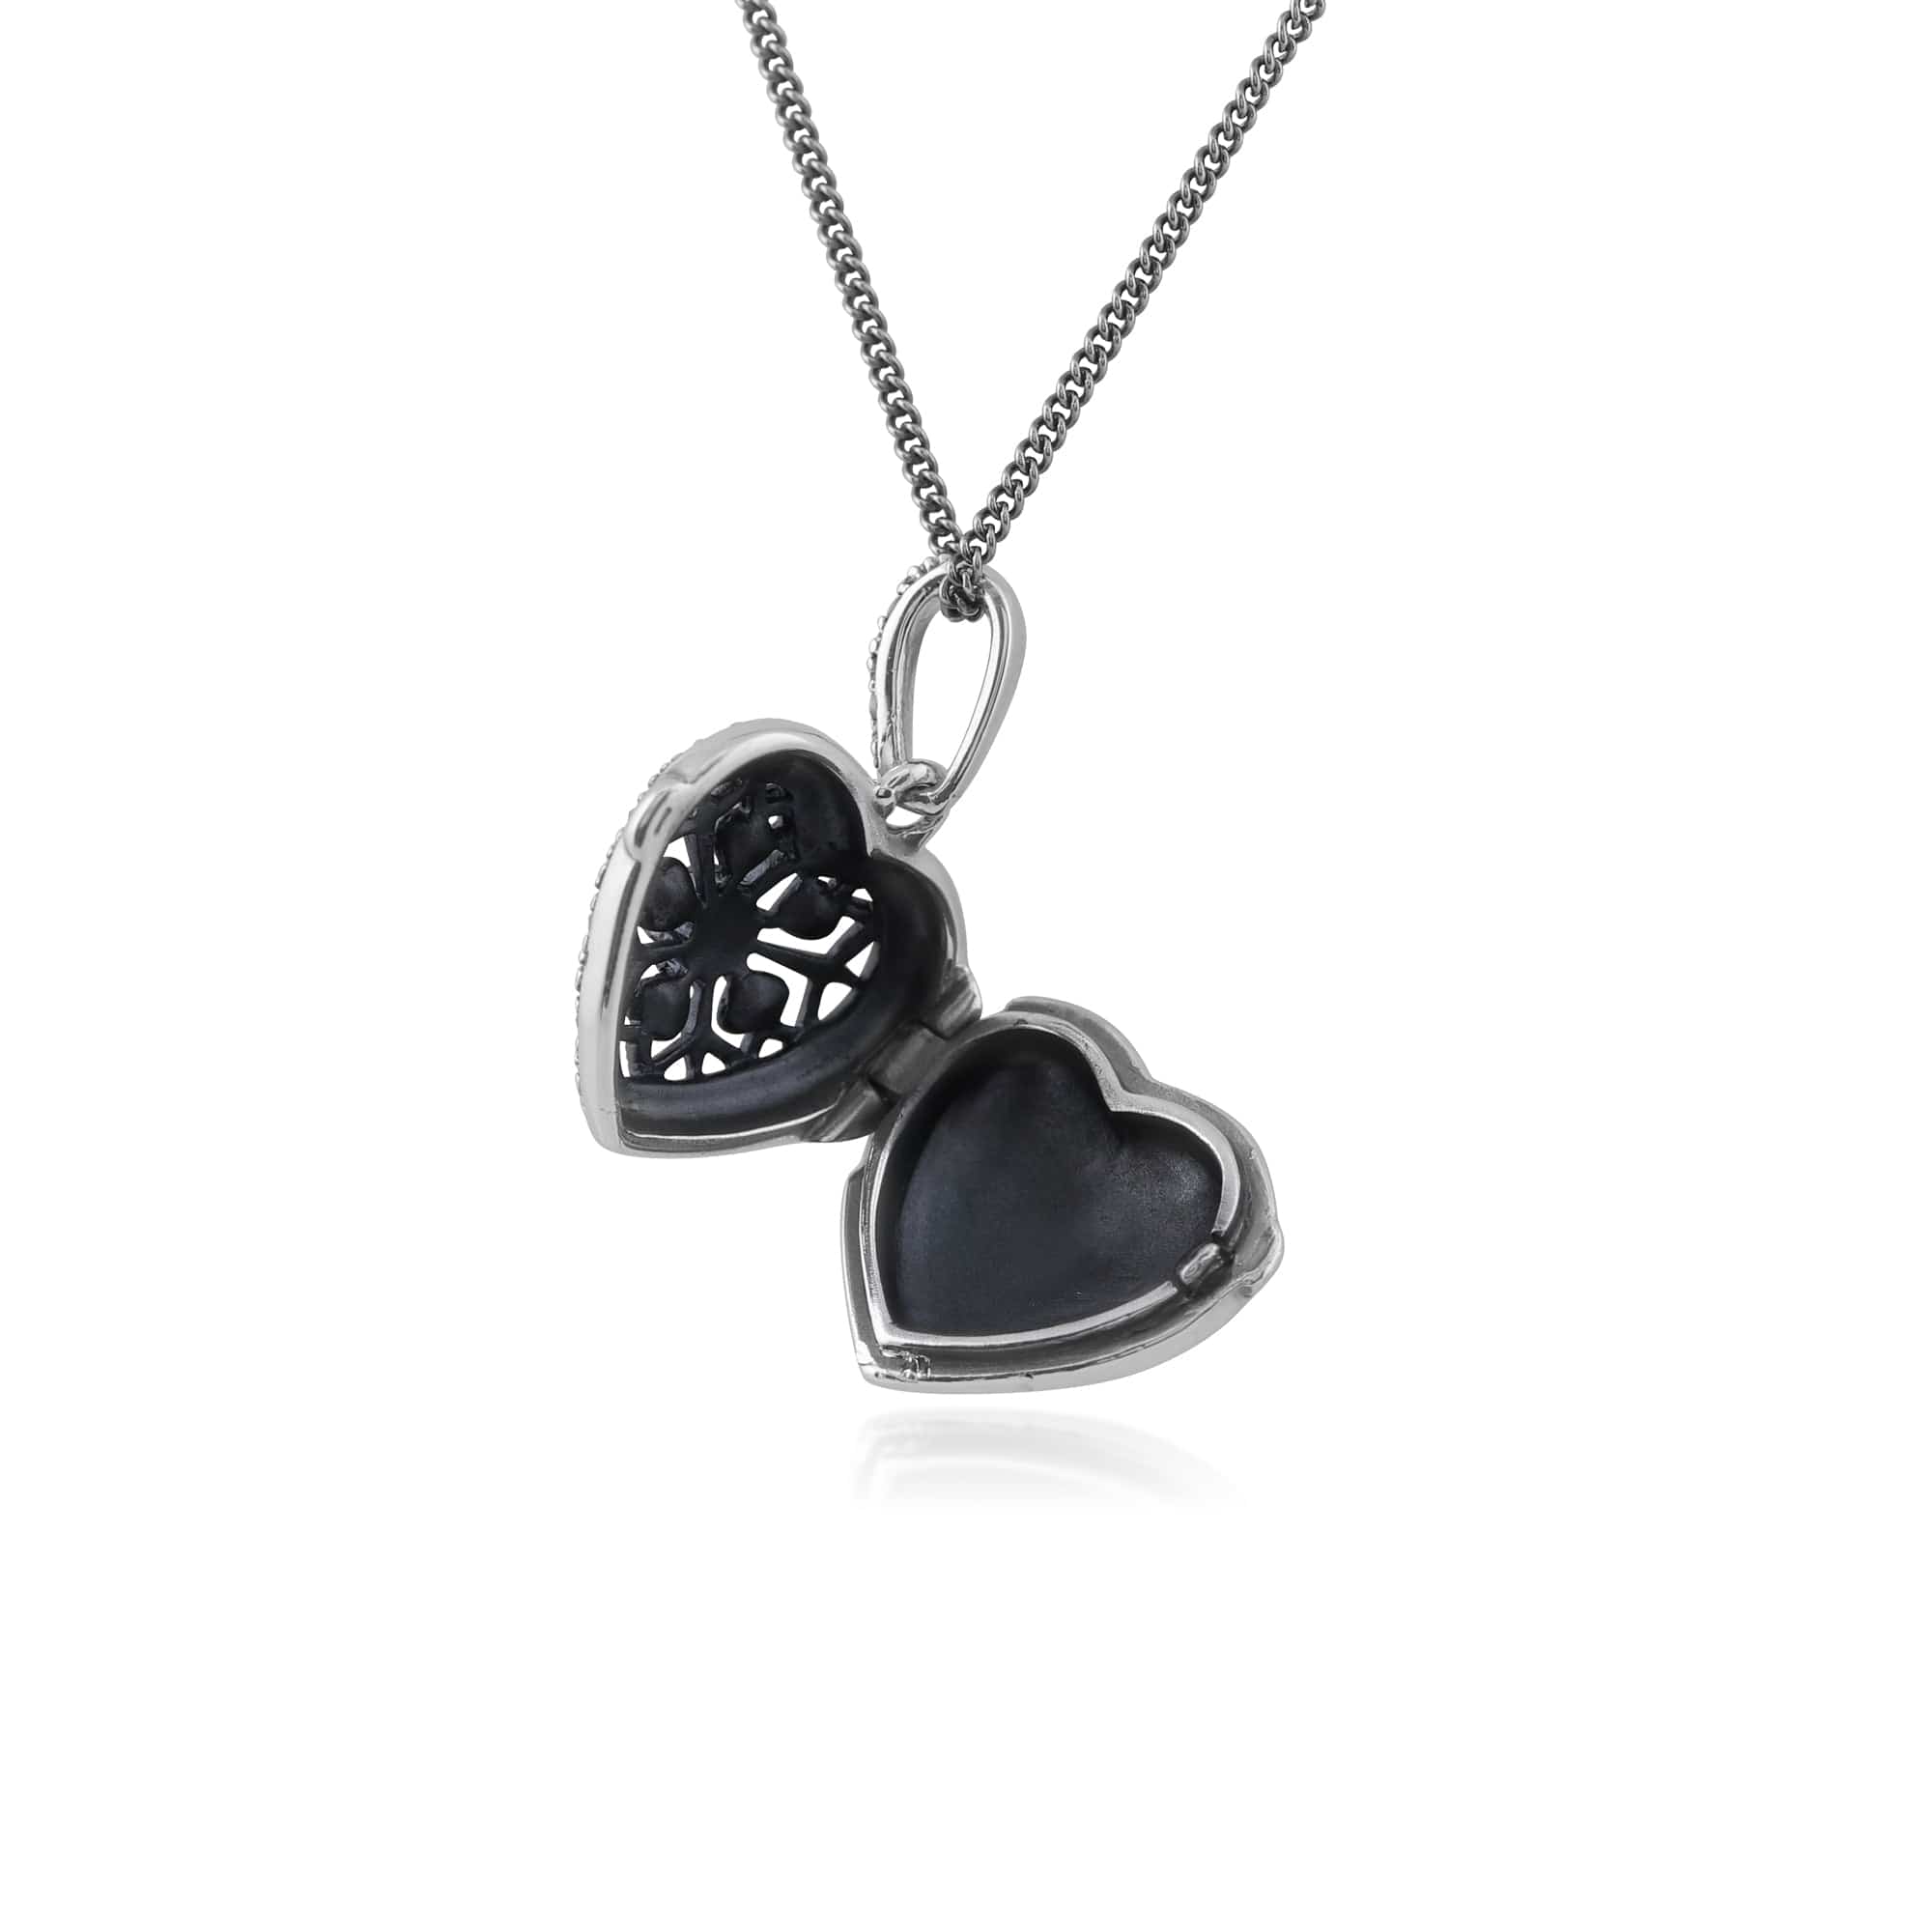 Art Nouveau Style Round Diamond & Marcasite Heart Necklace in 925 Sterling Silver - Gemondo